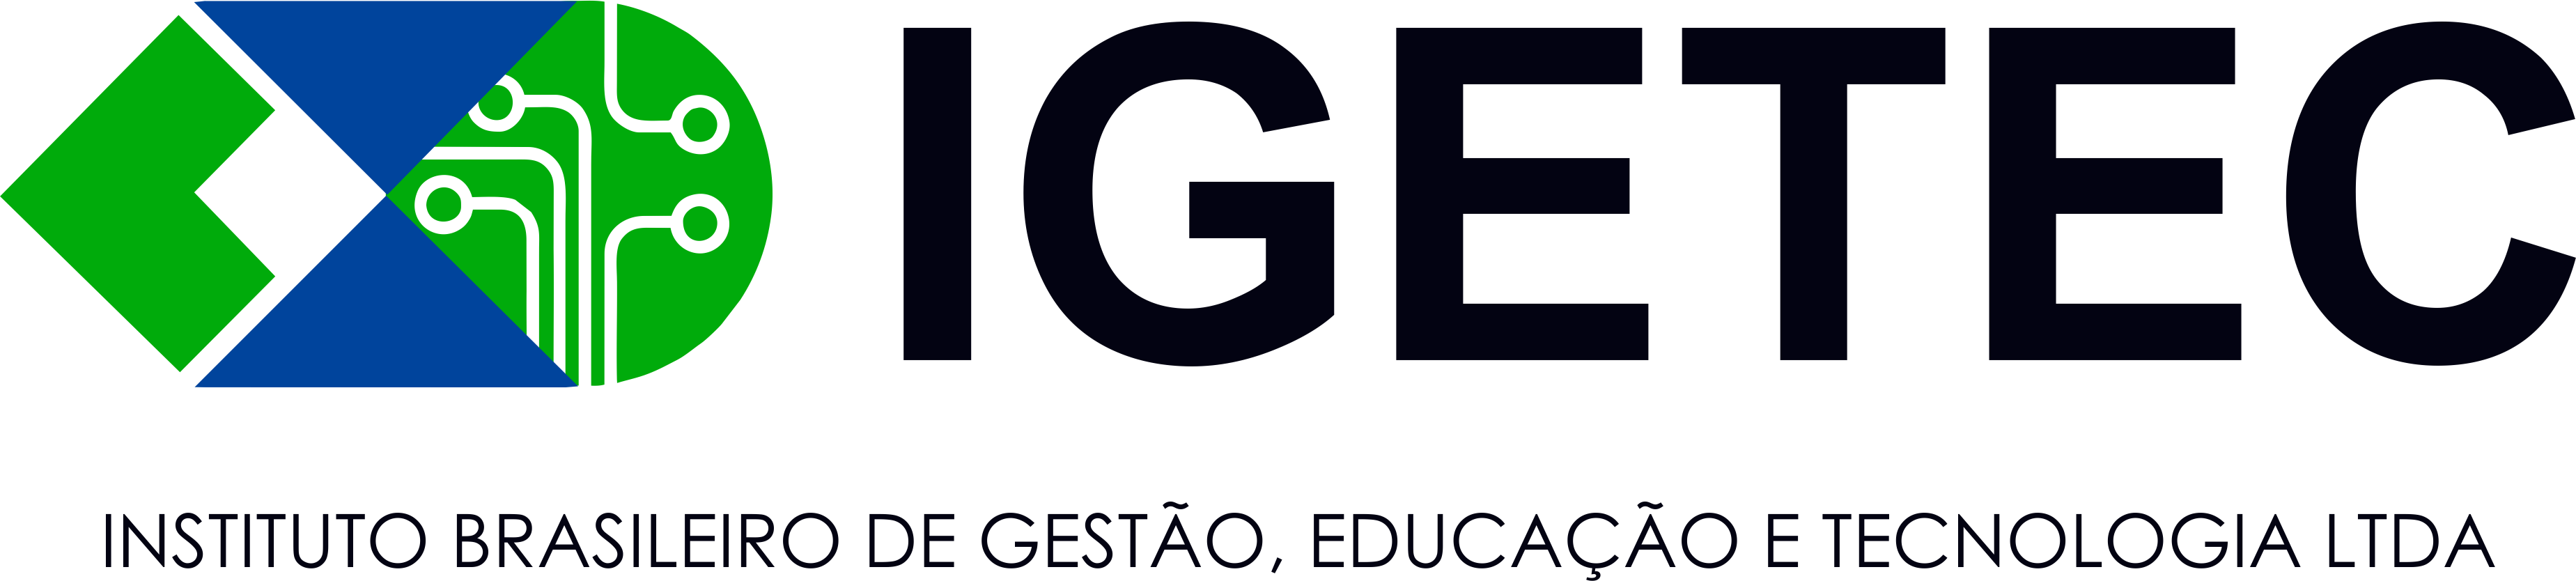 Logomarca IGETEC